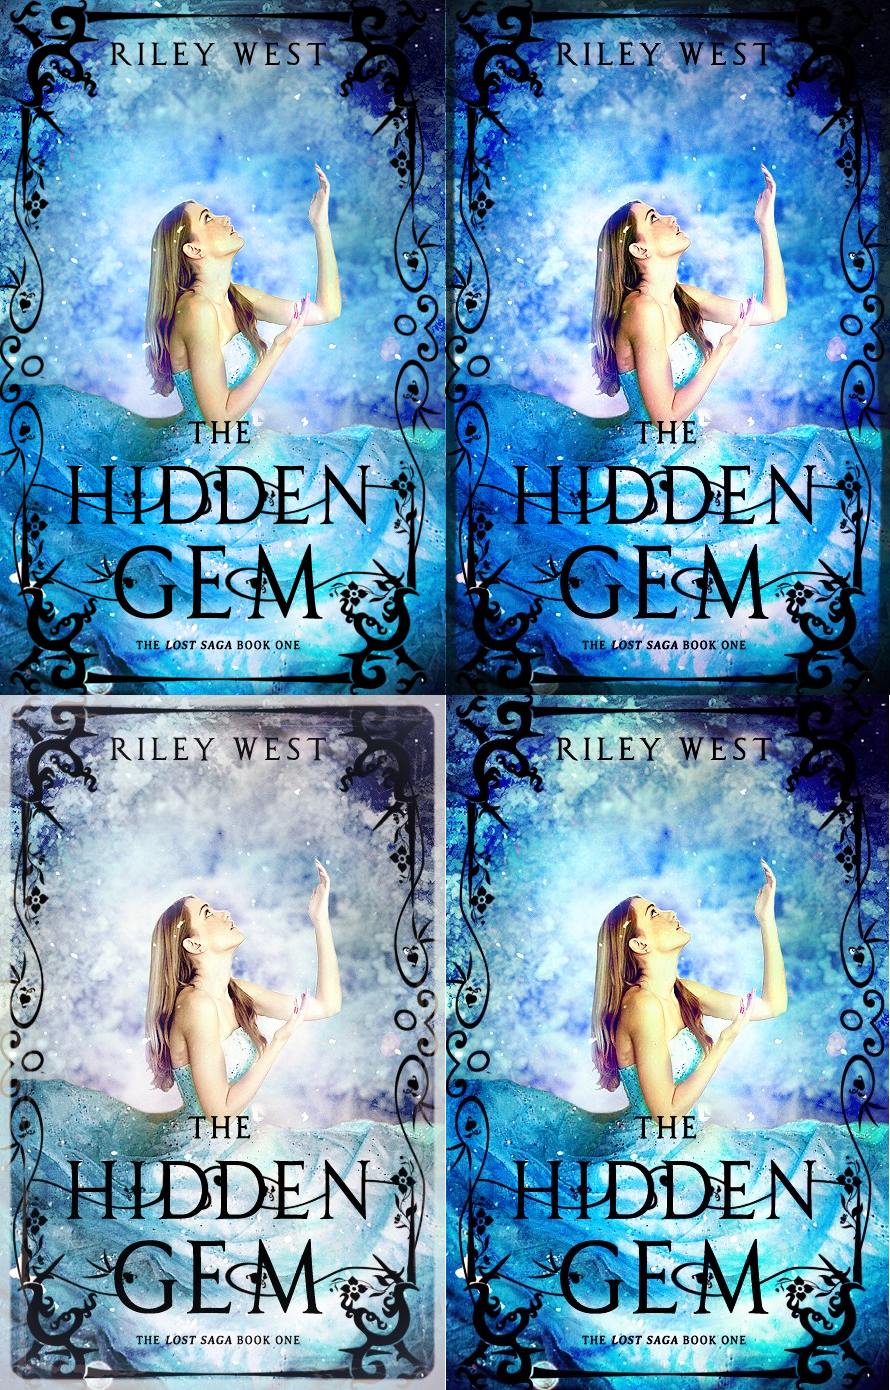 The hidden gem book cover graphic art design